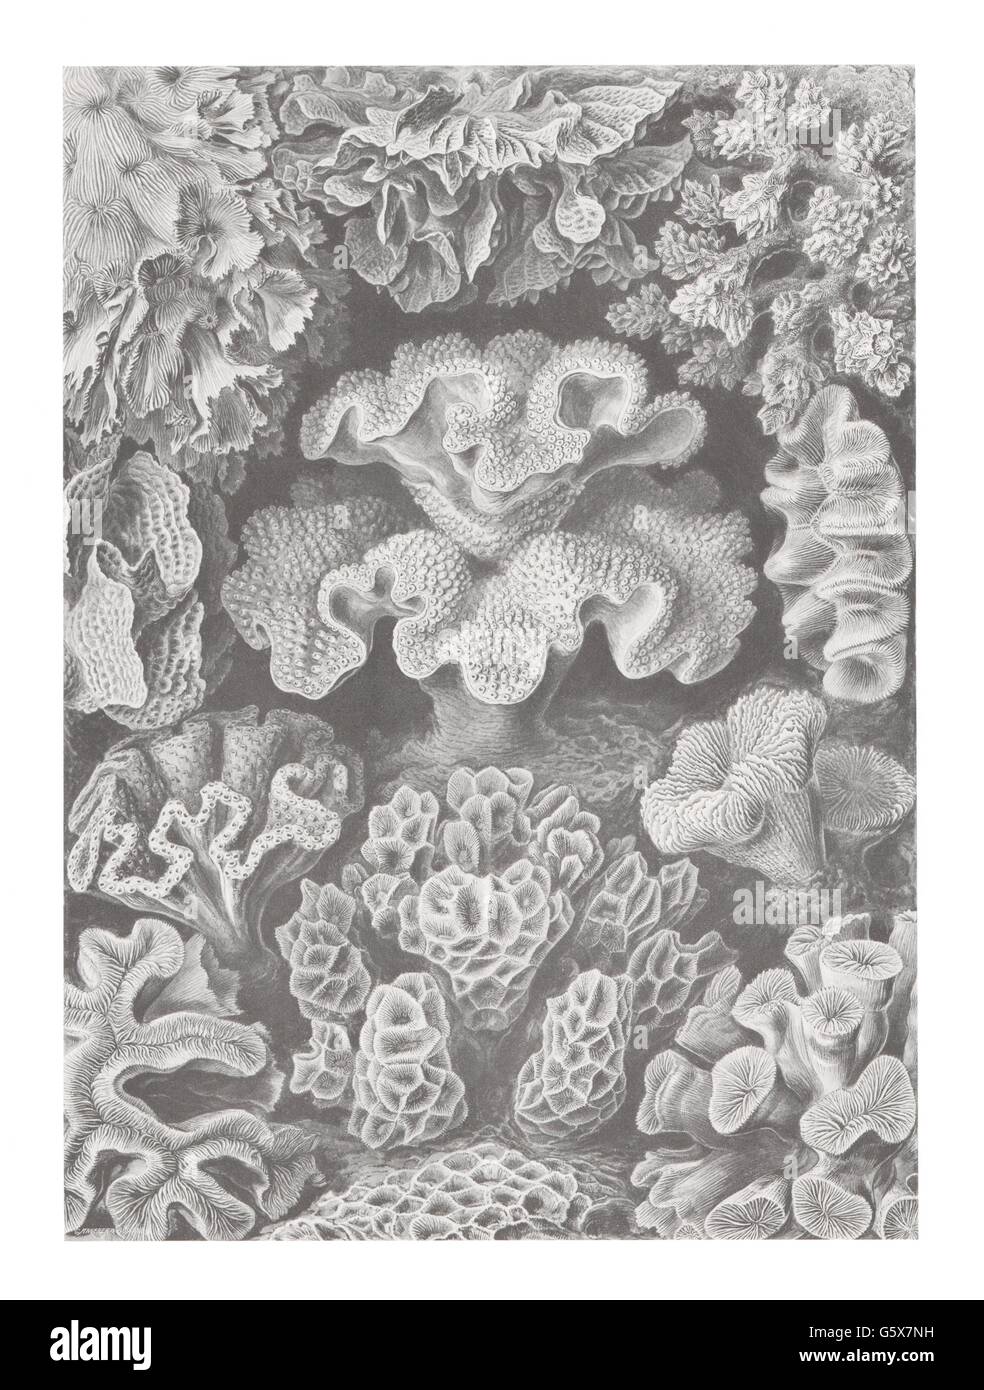 zoologie / Tiere, Anthozoa, Hexacorallien, Farblithographie, aus: Ernst Haeckel, 'Kunstformen der Natur', Leipzig - Wien, 1899 - 1904, Additional-Rights-Clearences-not available Stockfoto